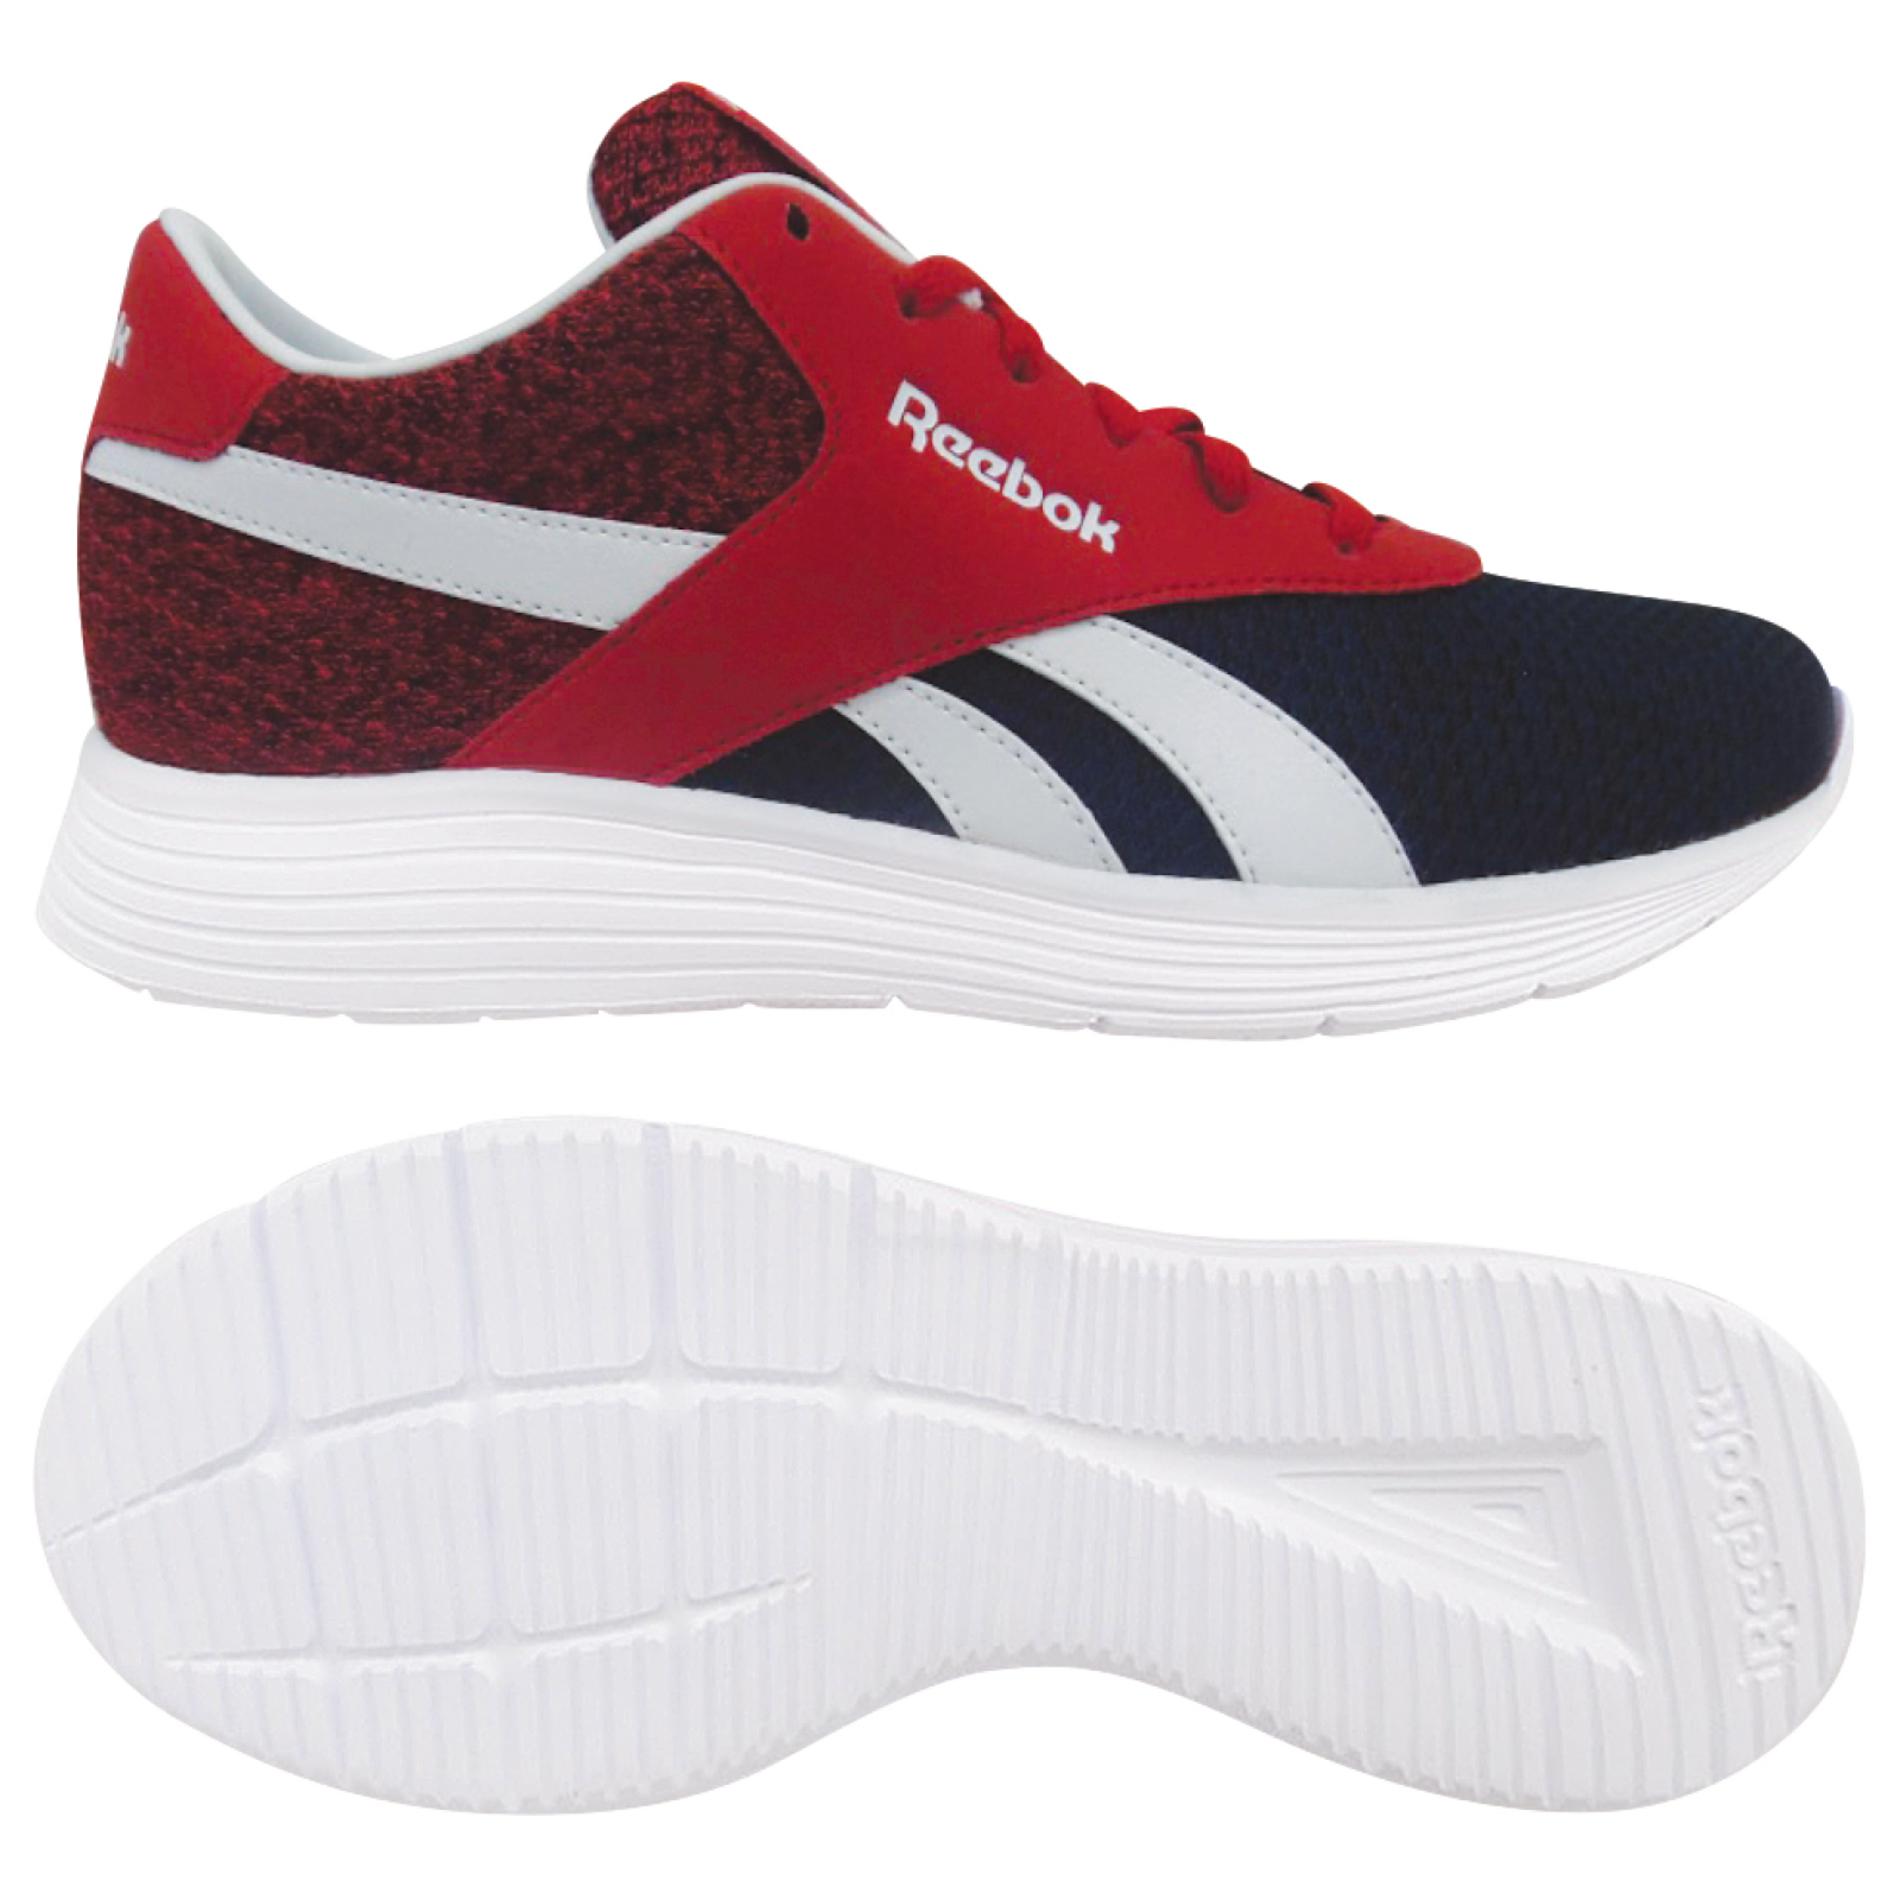 Reebok Men's Royal EC Ride Athletic Shoe - Red/White/Blue